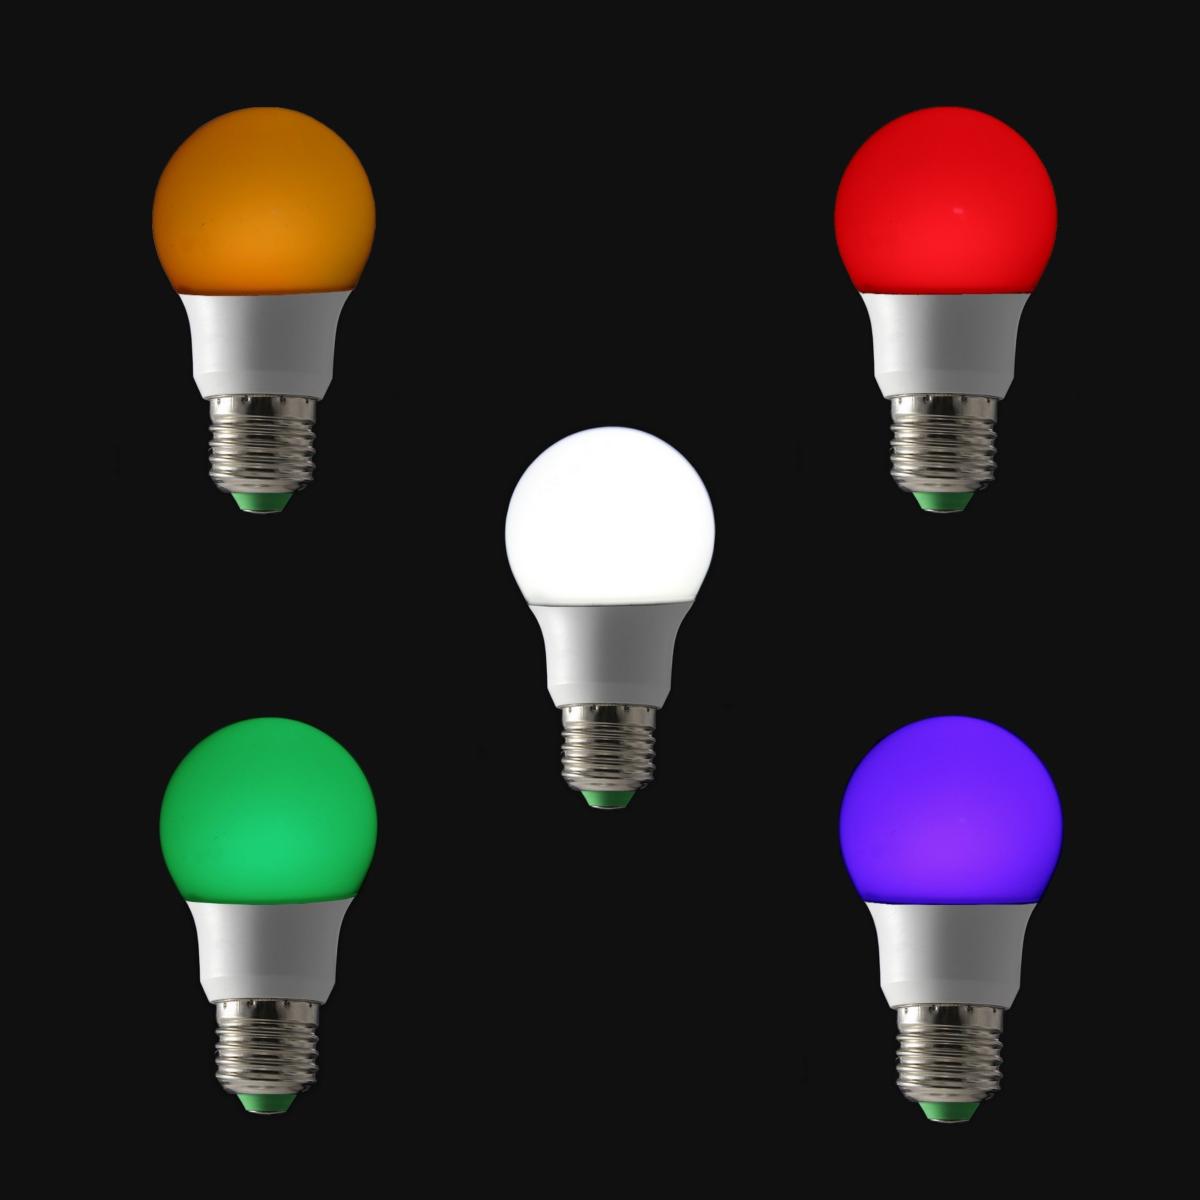 7W LED lampadaire coin lampe coin lampe RGB lampadaire couleur changeante  lampadaire